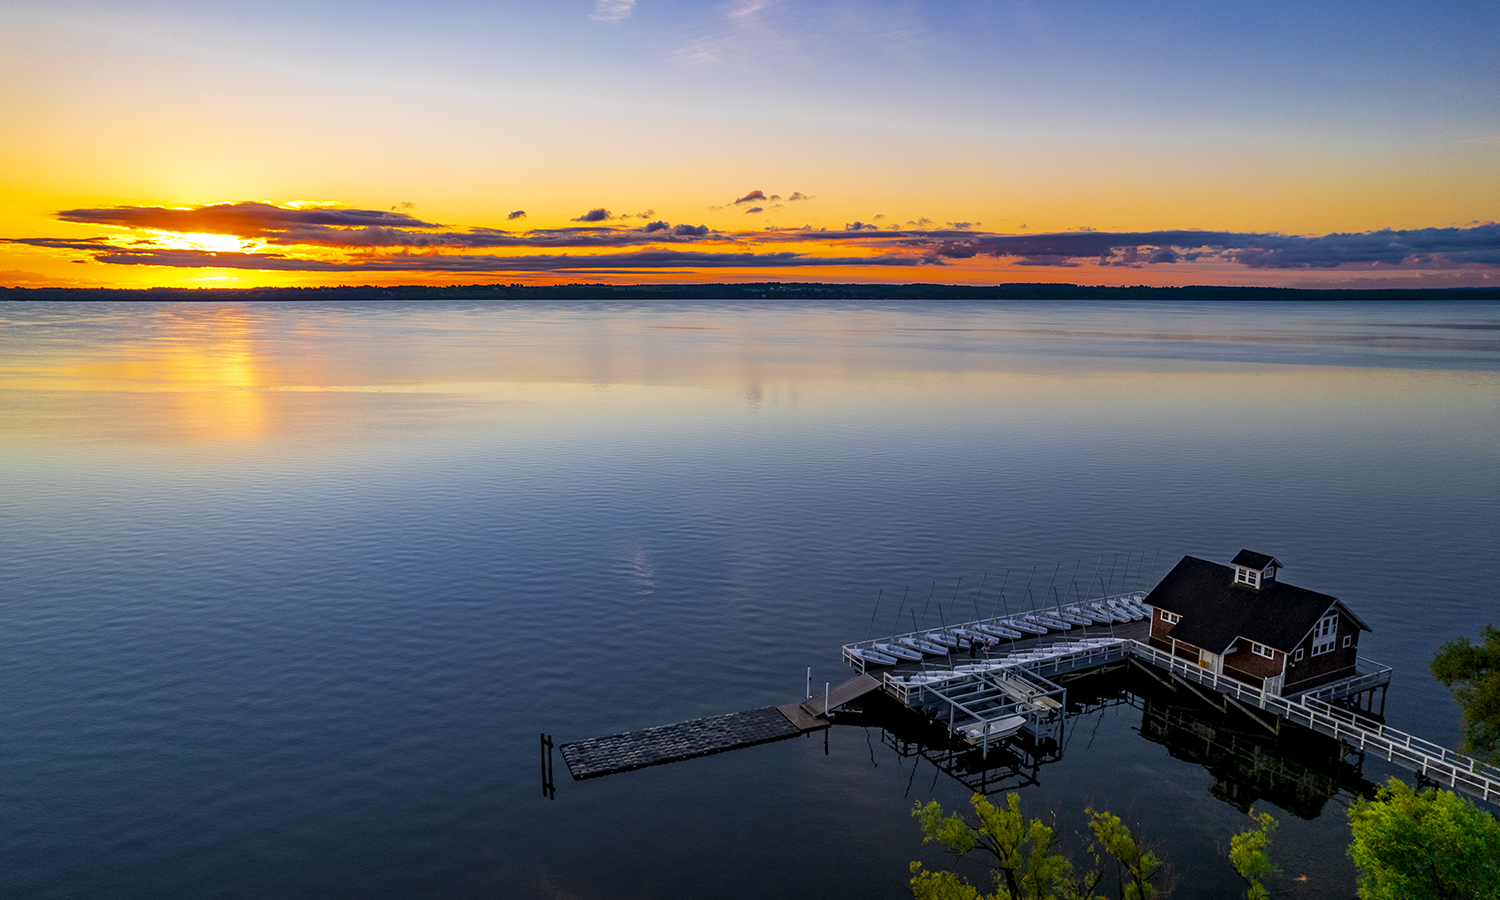 The sun rises over Seneca Lake.